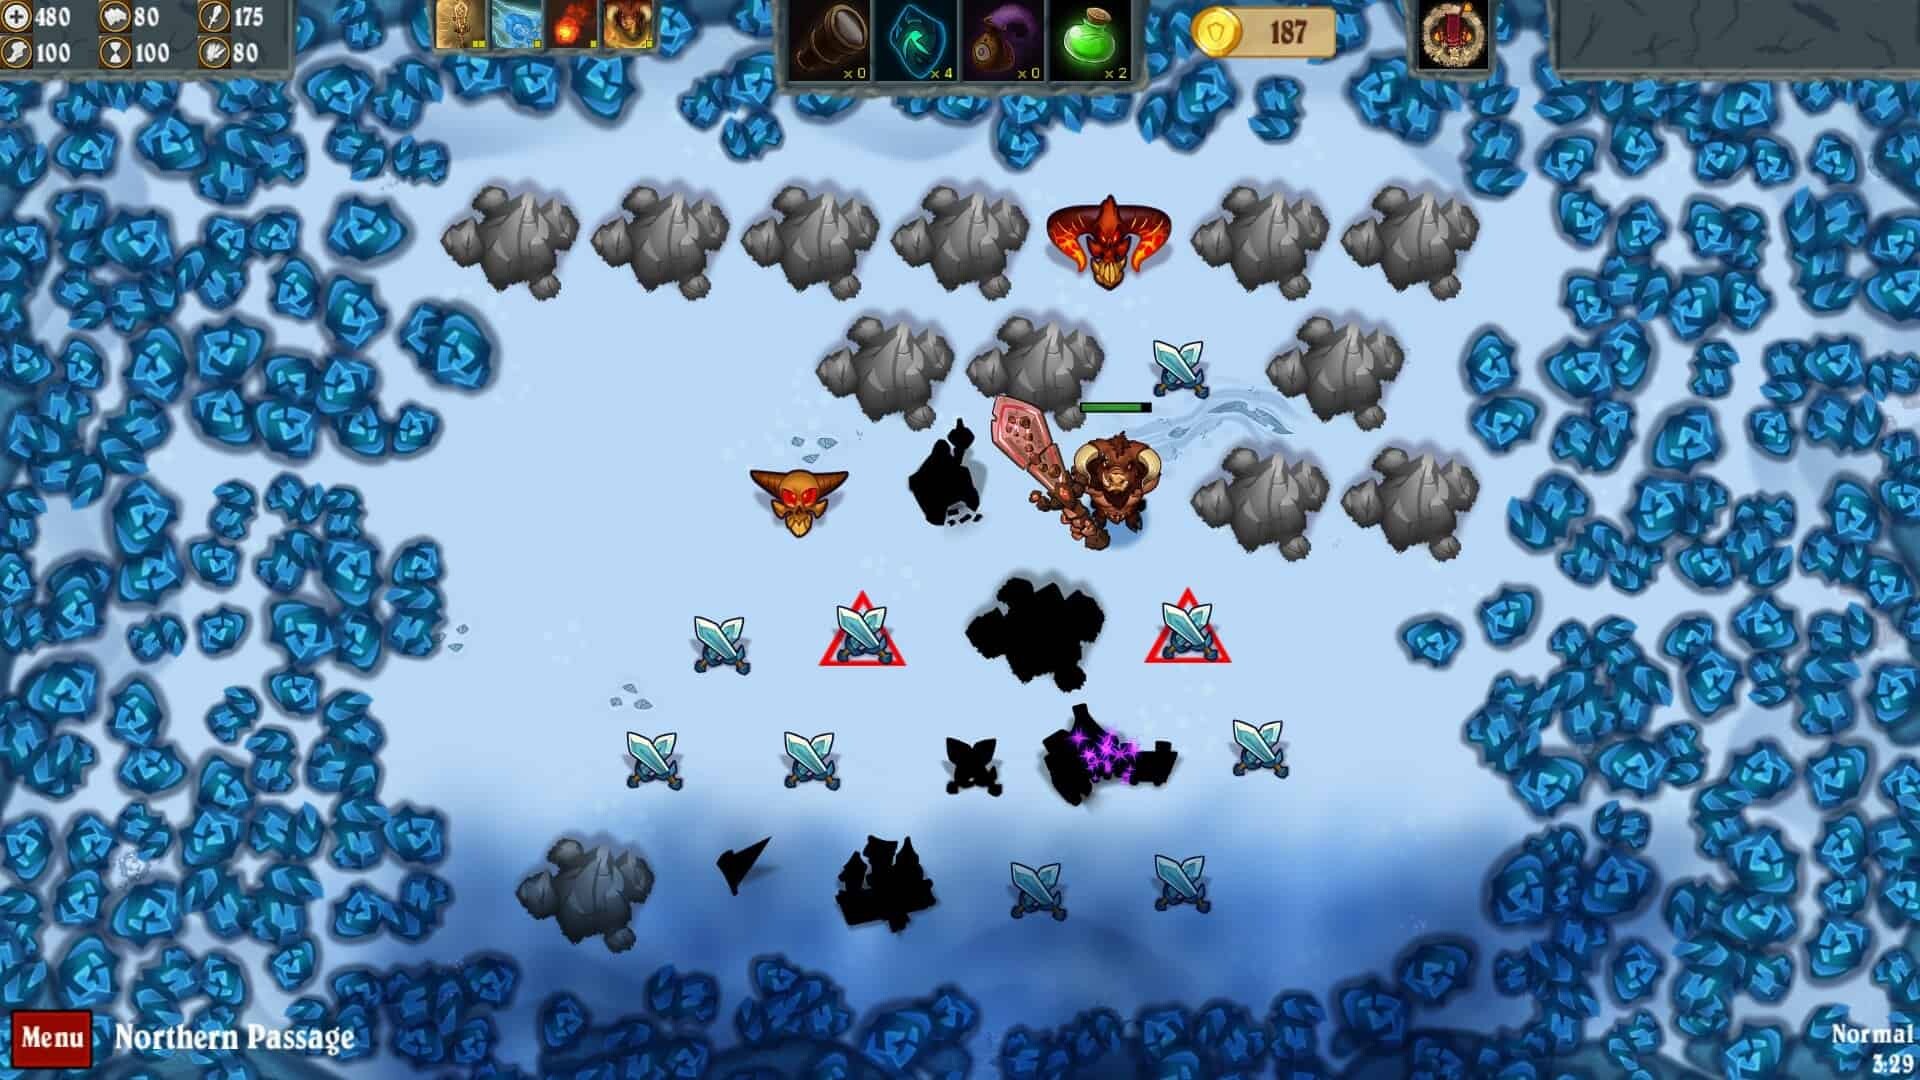 Flamebreak game screenshot, map